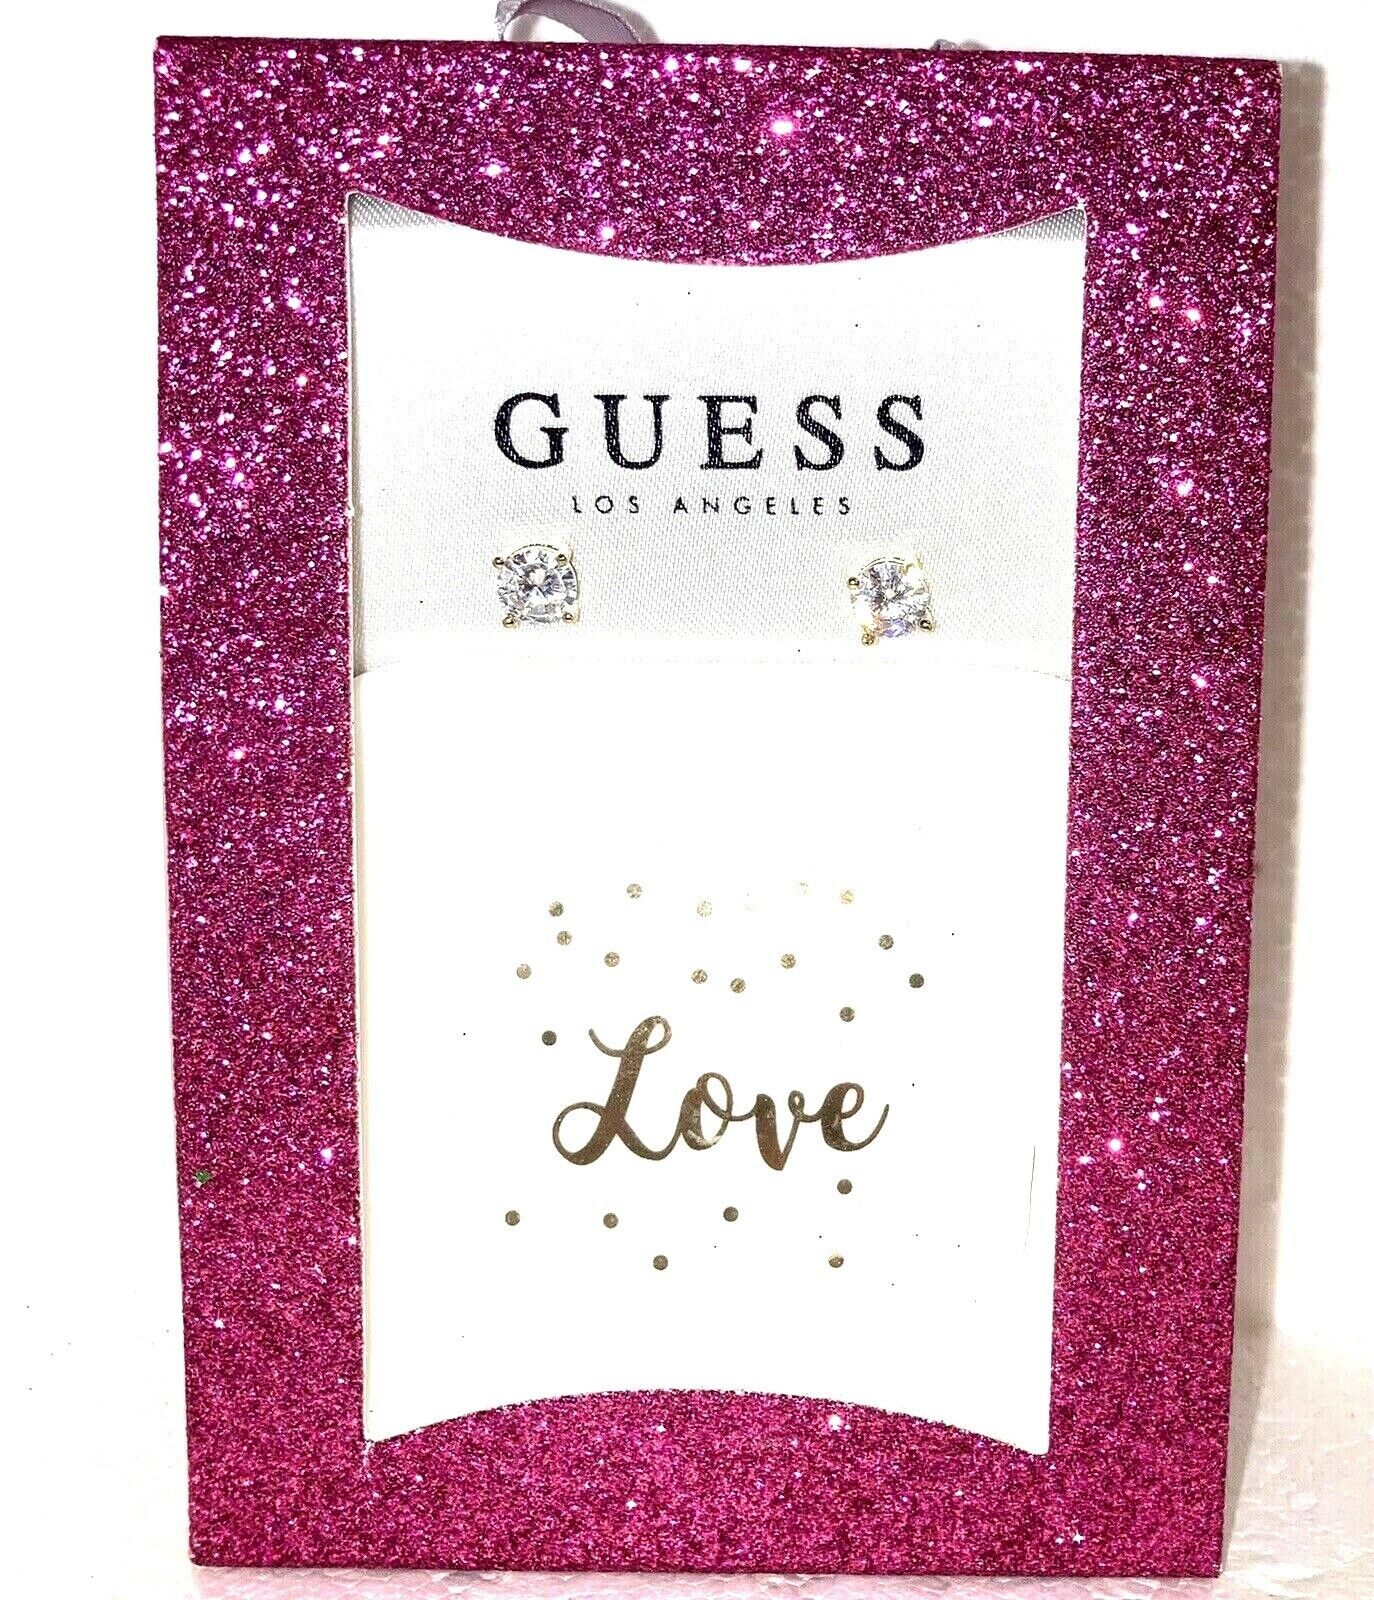 GUESS LOVE Crystal Stud Earrings & Trinket Tray Gift Set - $18.40